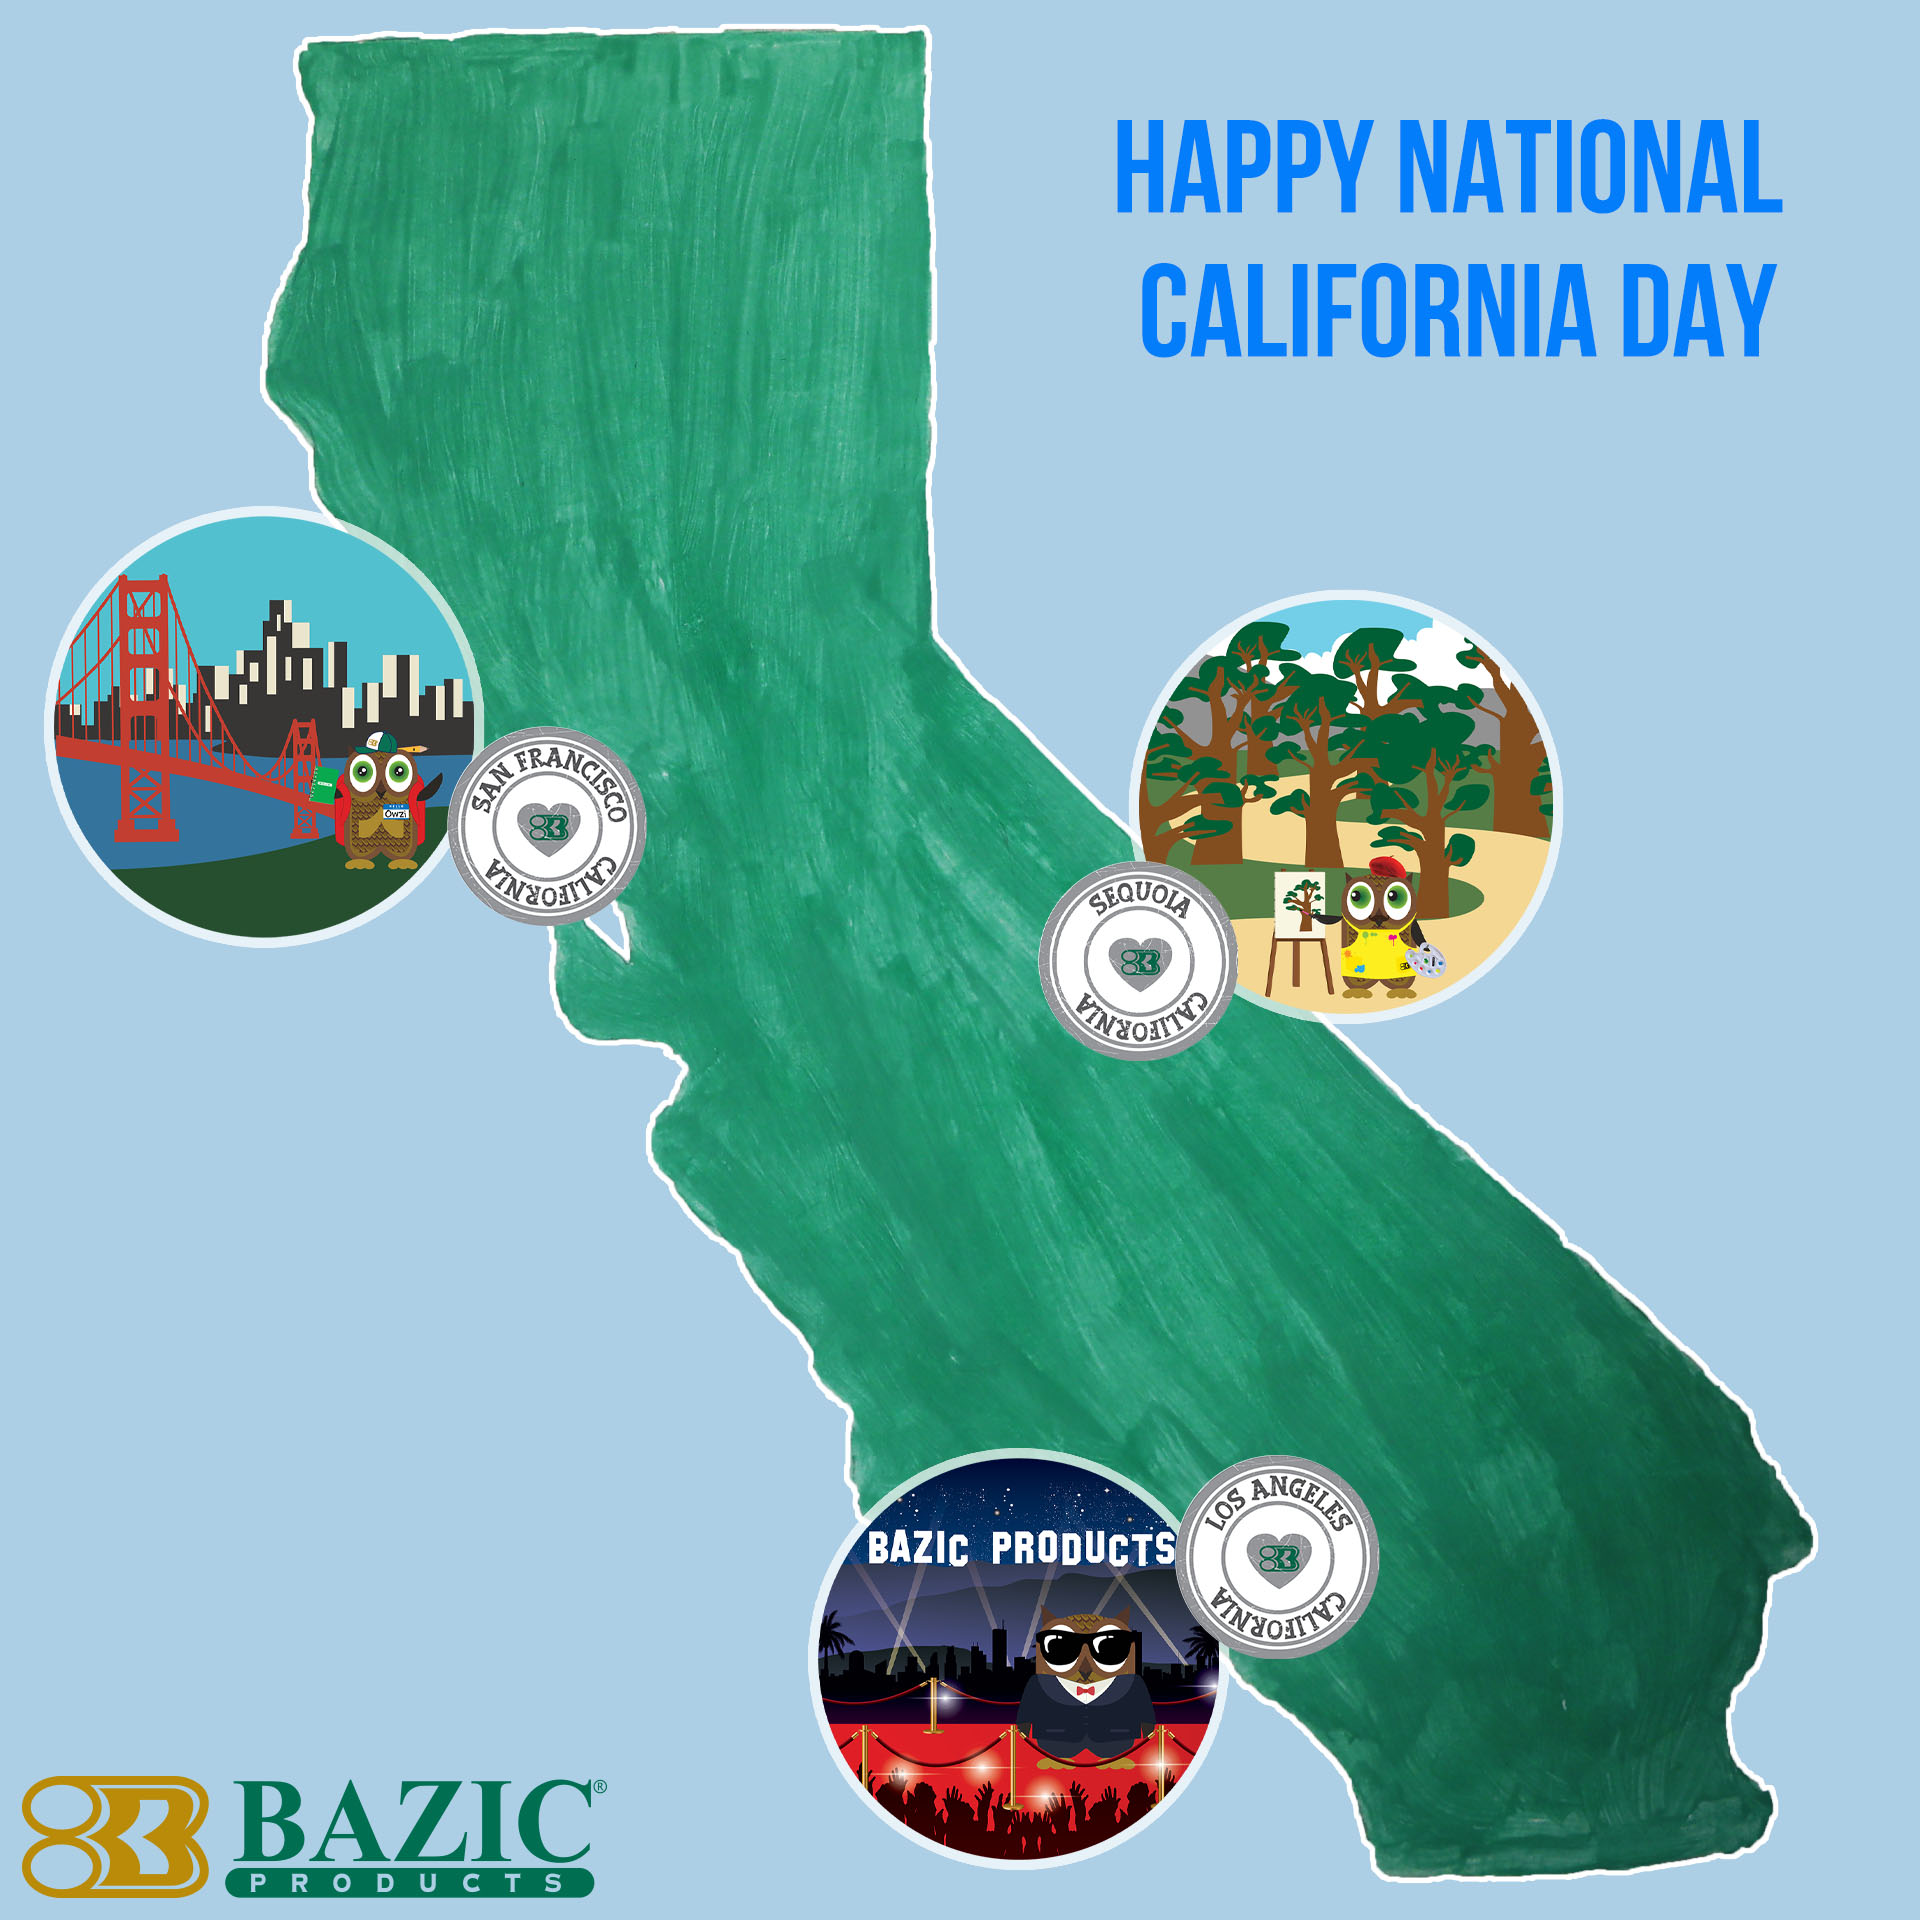 National California Day_social mediaFacebook + Instagram 01